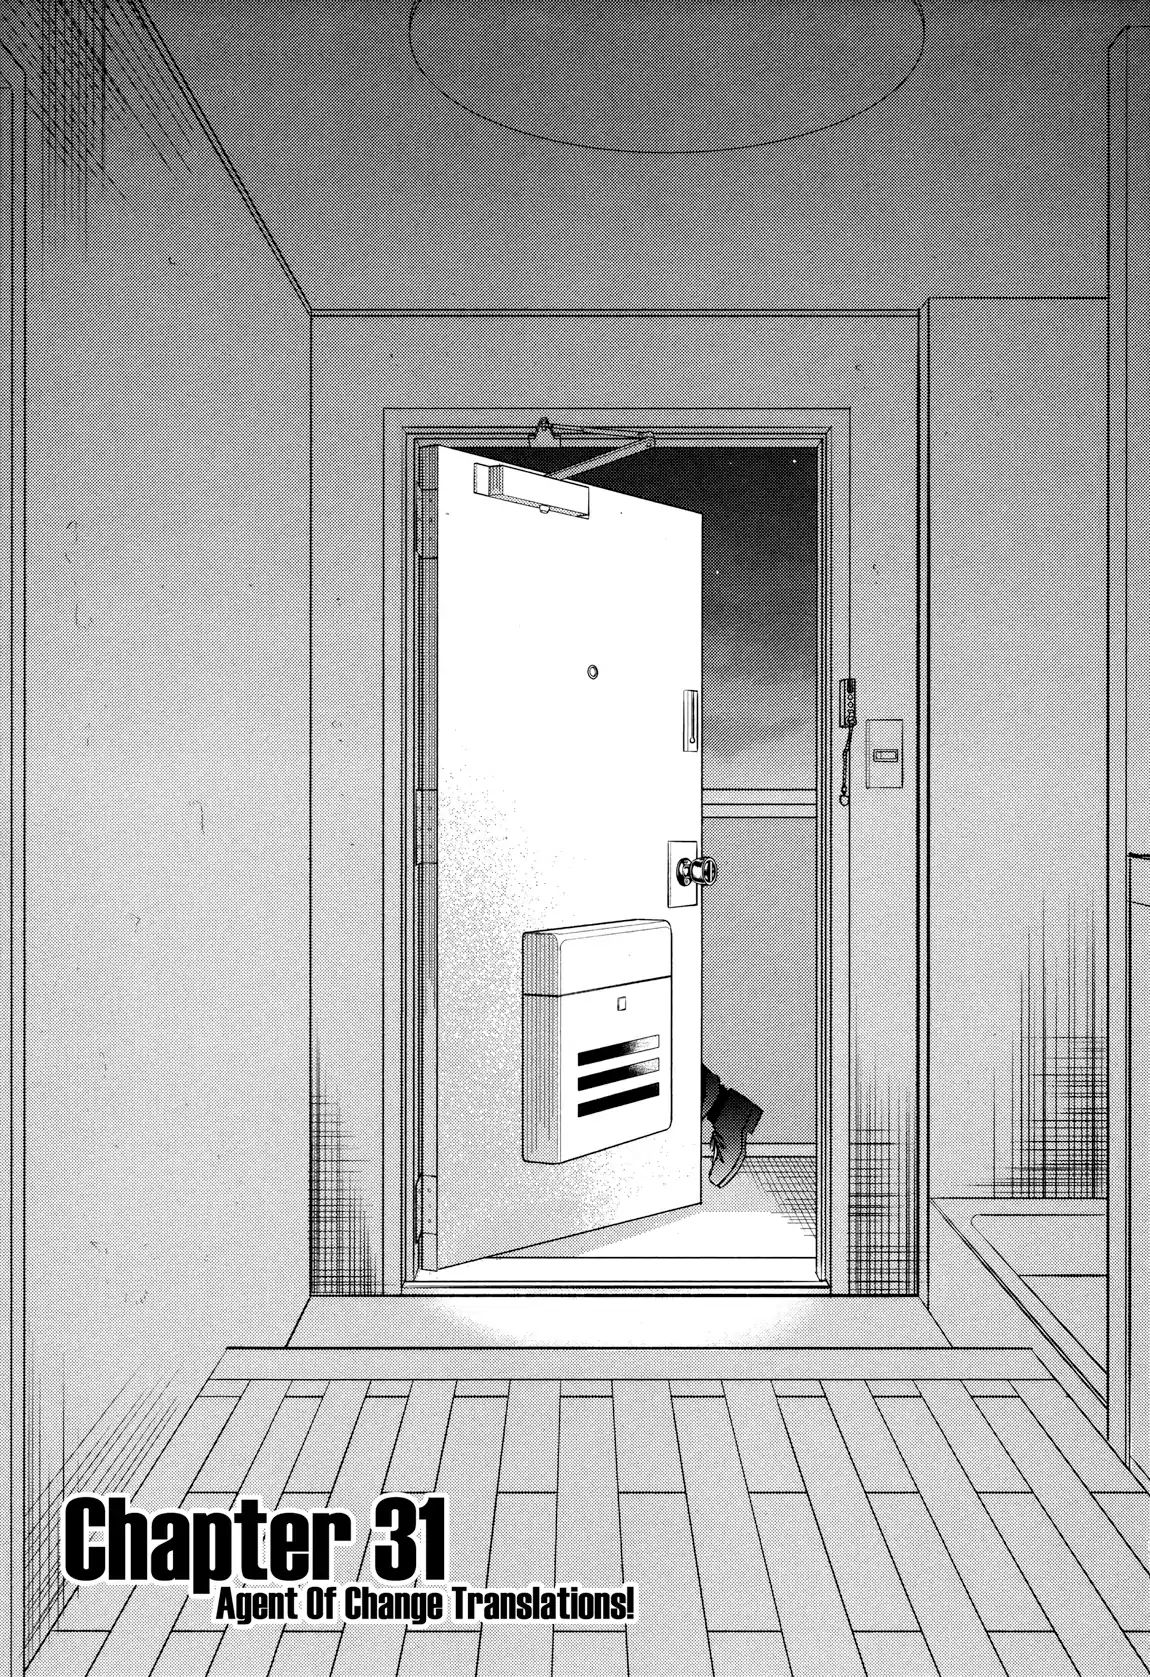 Sachi-Iro No One Room - Page 3